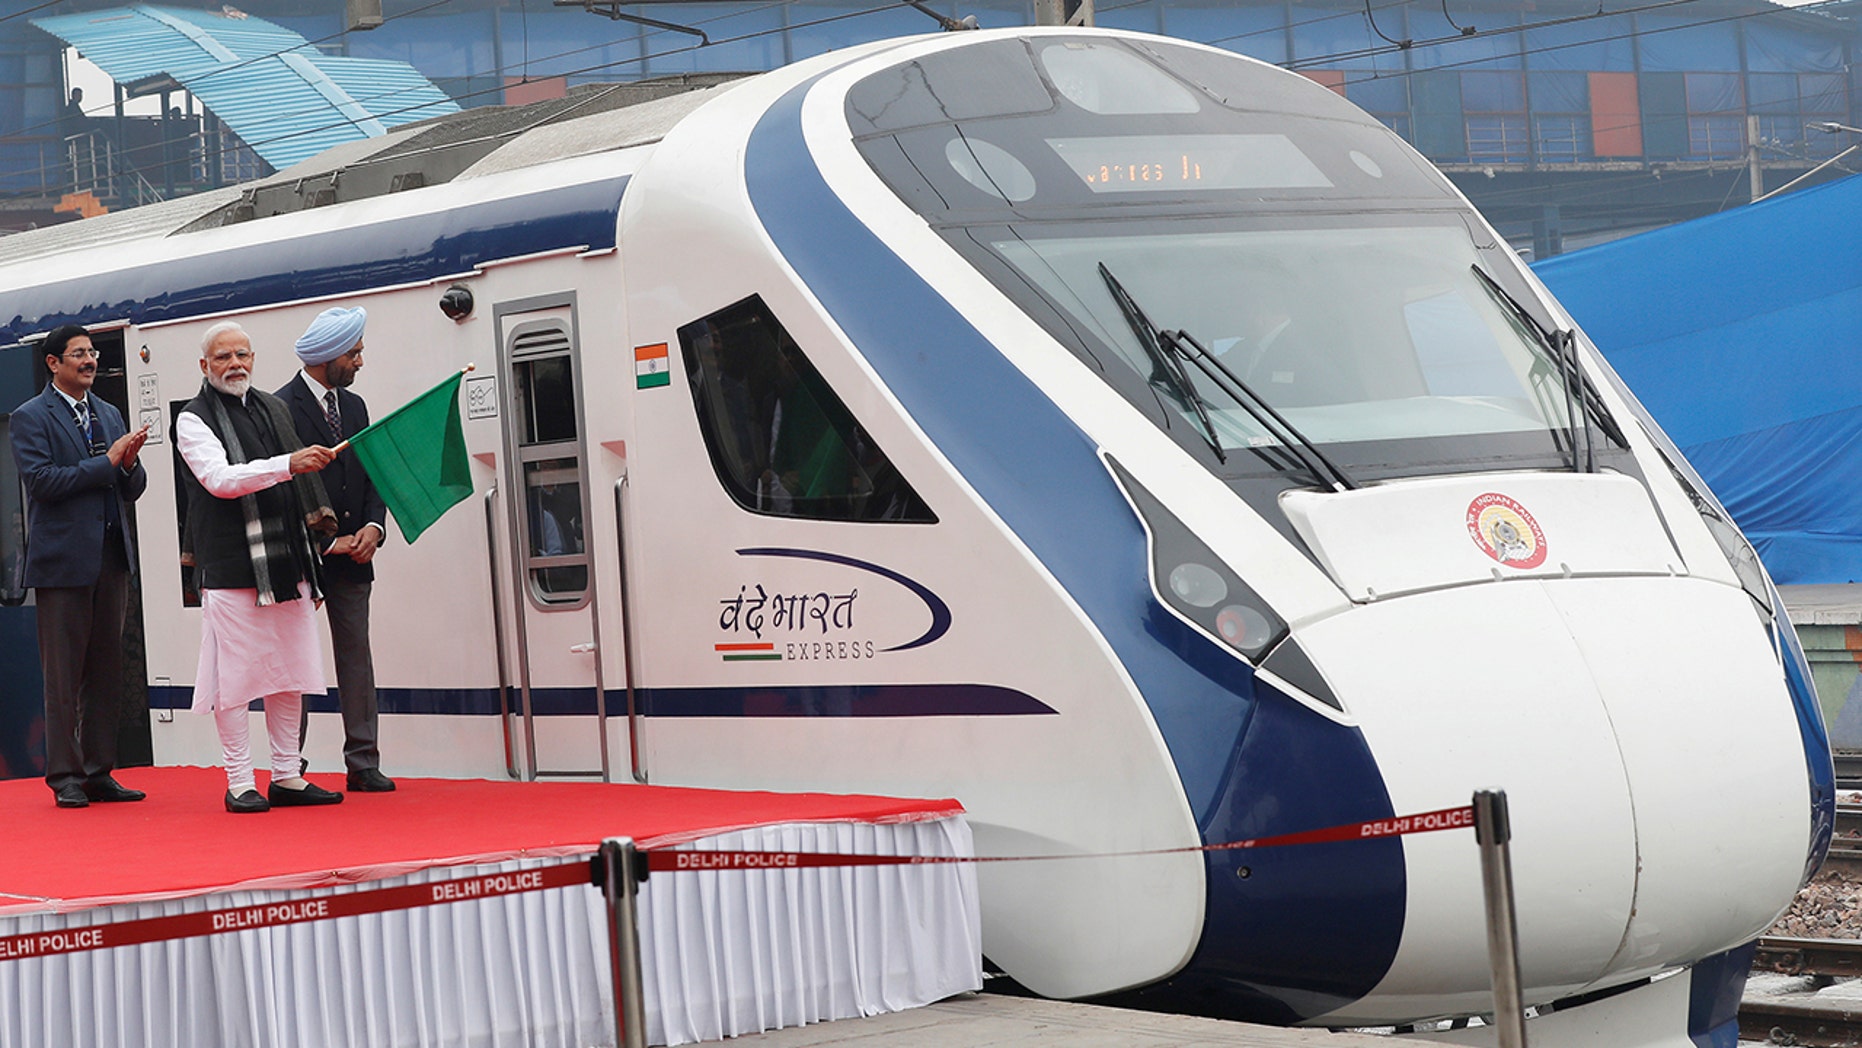 India's fastest train breaks down on its first trip | Fox News